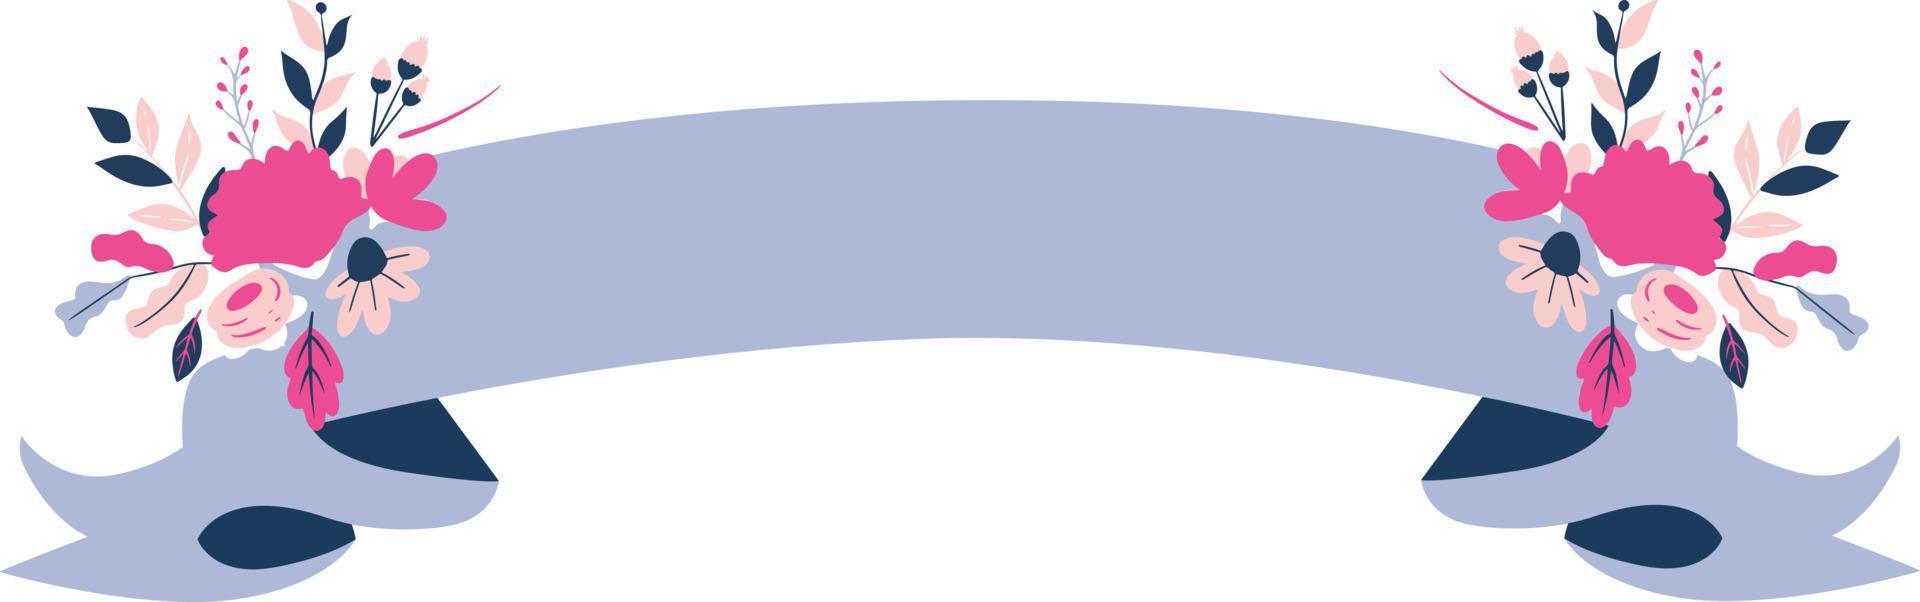 blaues band mit blumenillustration vektor